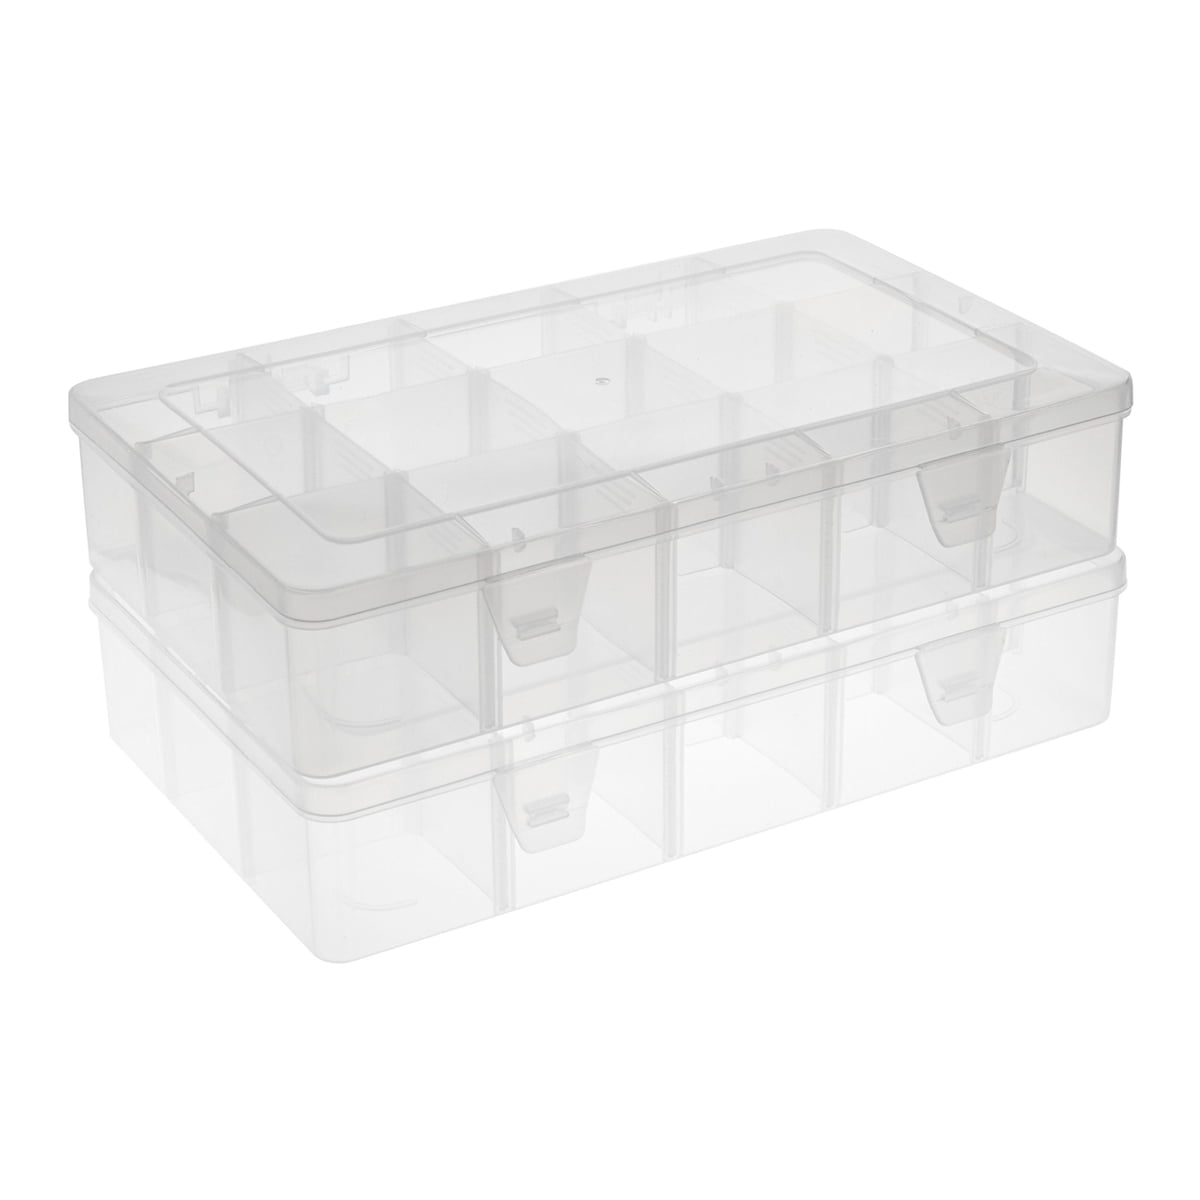 Tnqhuq Plastic Organizer Box Craft Bead Tackle 15 Grids, 2 Pack